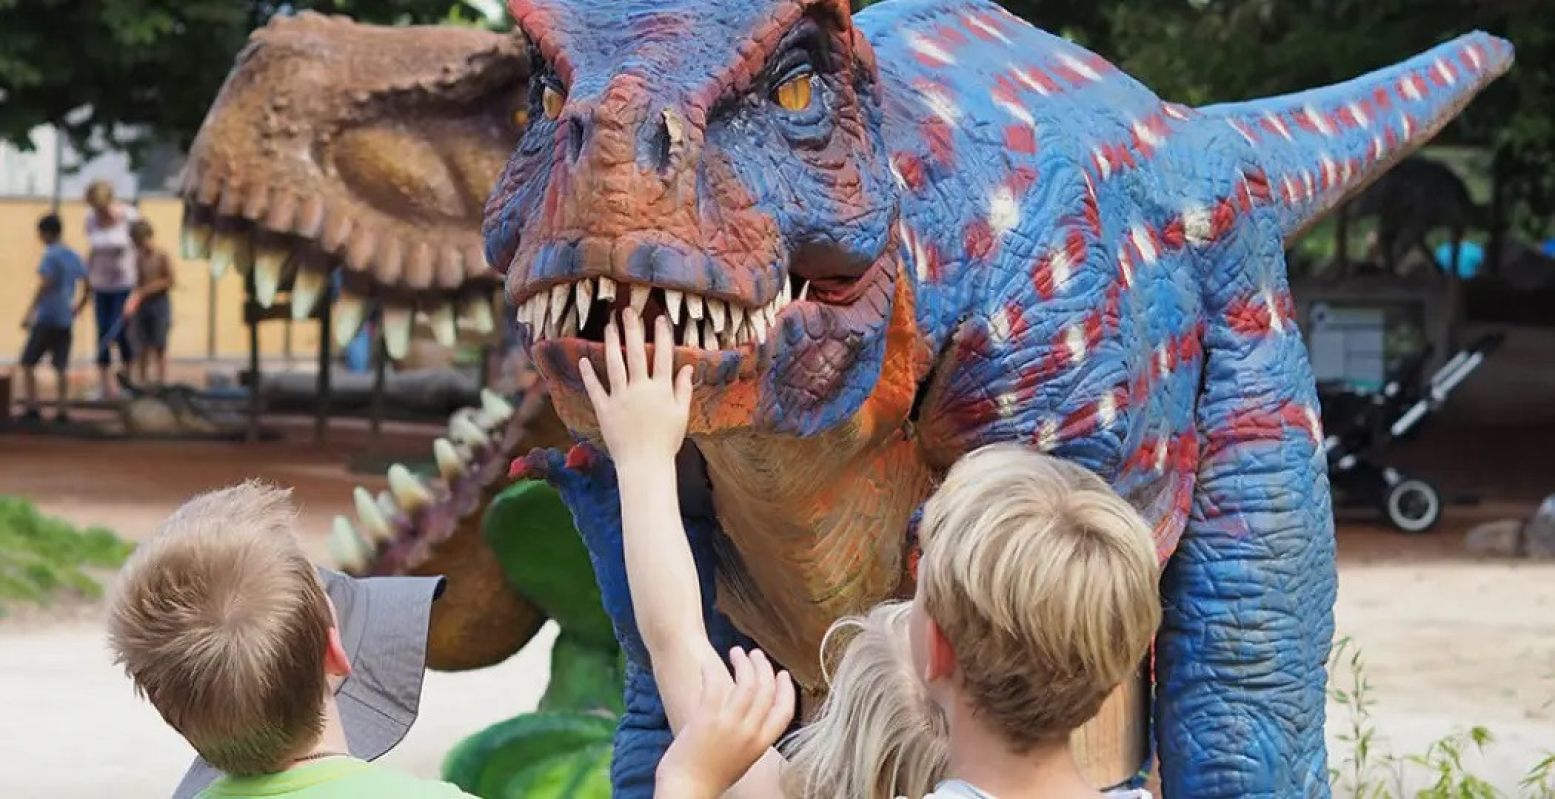 Beleef je eigen Jurassic Park momentje bij één van de dinoparken, zoals Dinoland Zwolle. Foto: Dinoland Zwolle